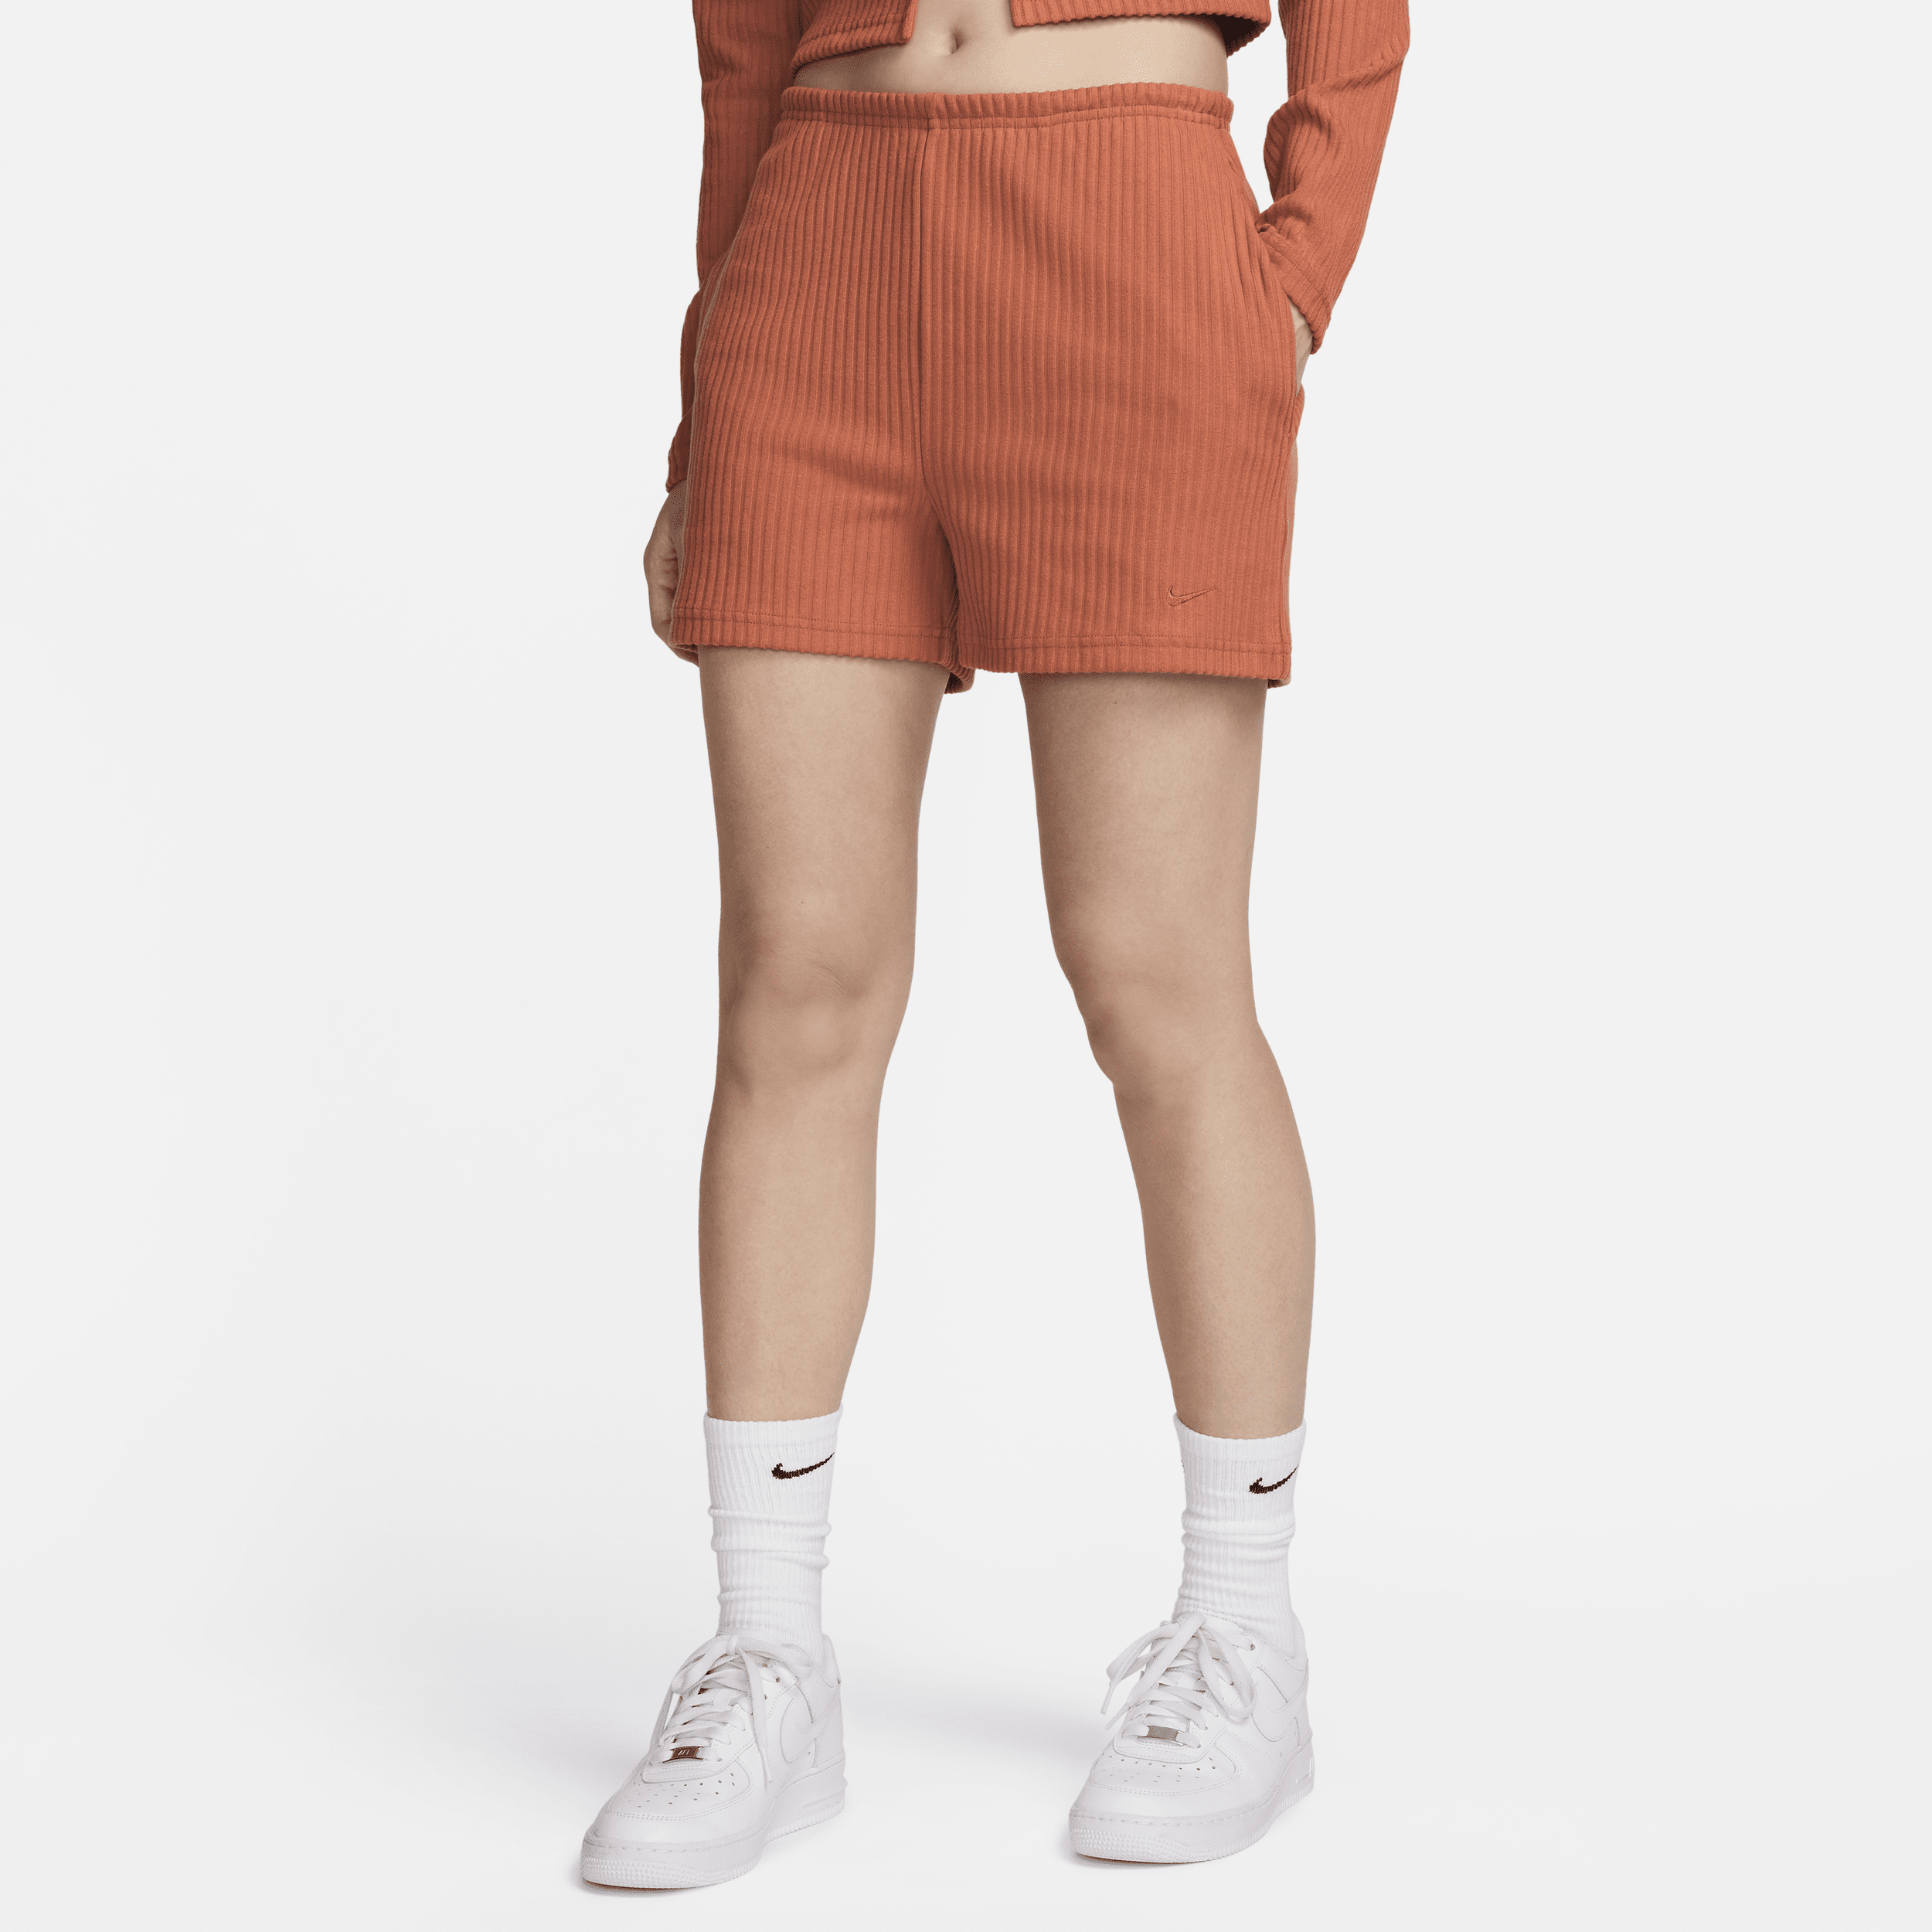 Shorts slim fit a costine a vita alta 8 cm Nike Sportswear Chill Terry – Donna - Arancione